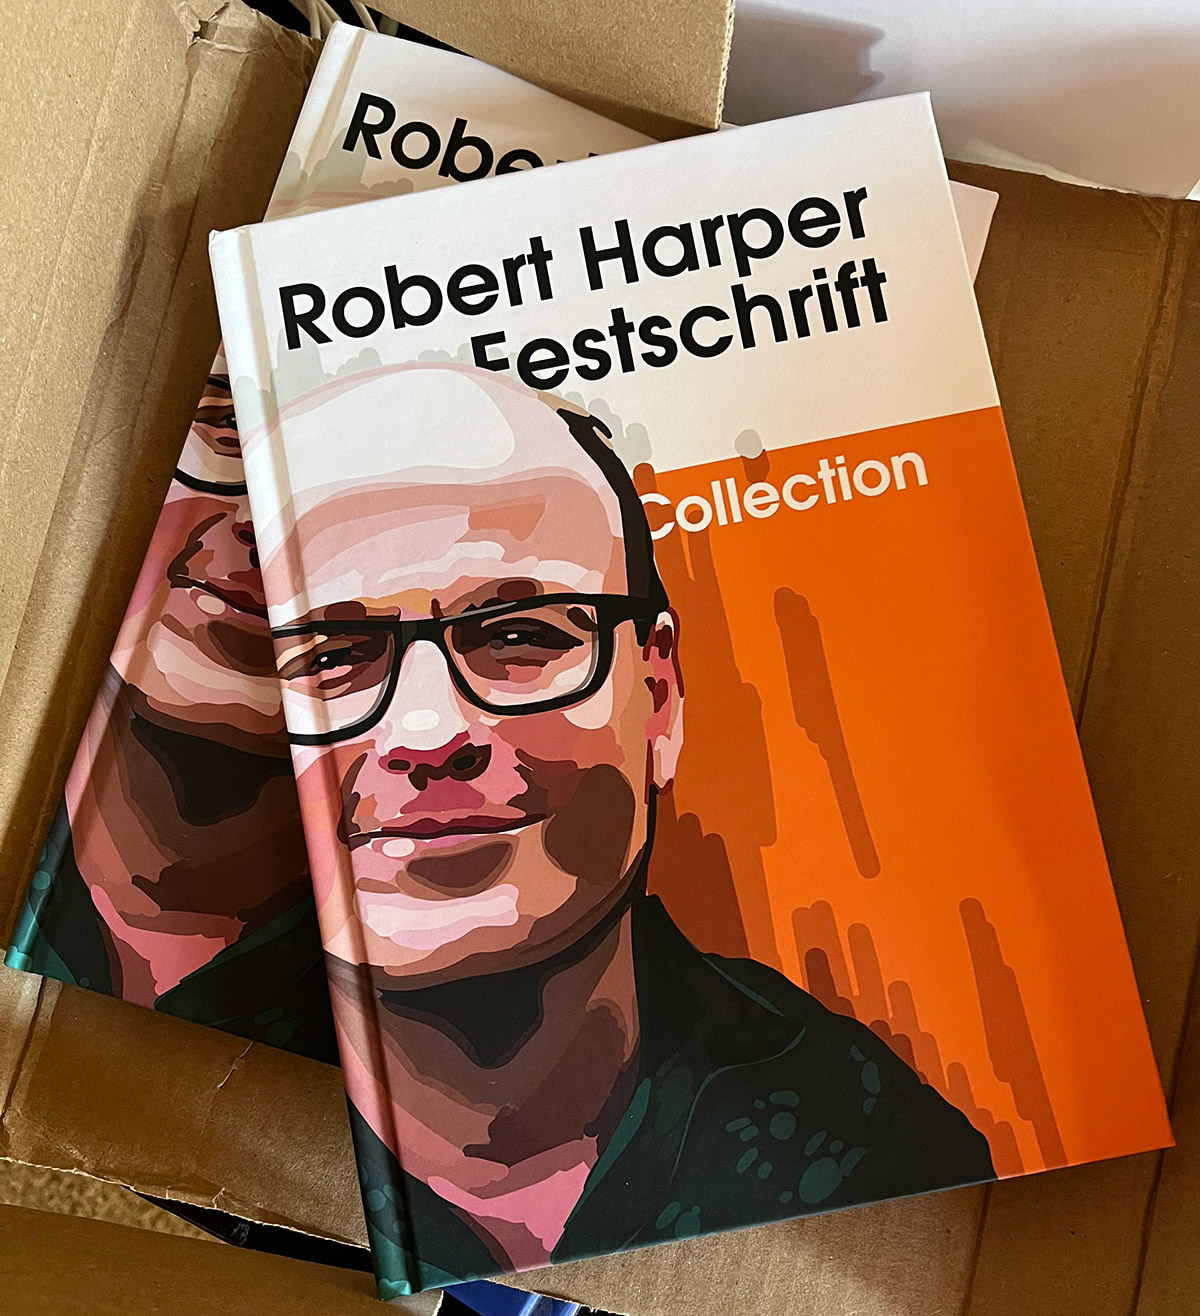 Robert Harper Festschrift Collection